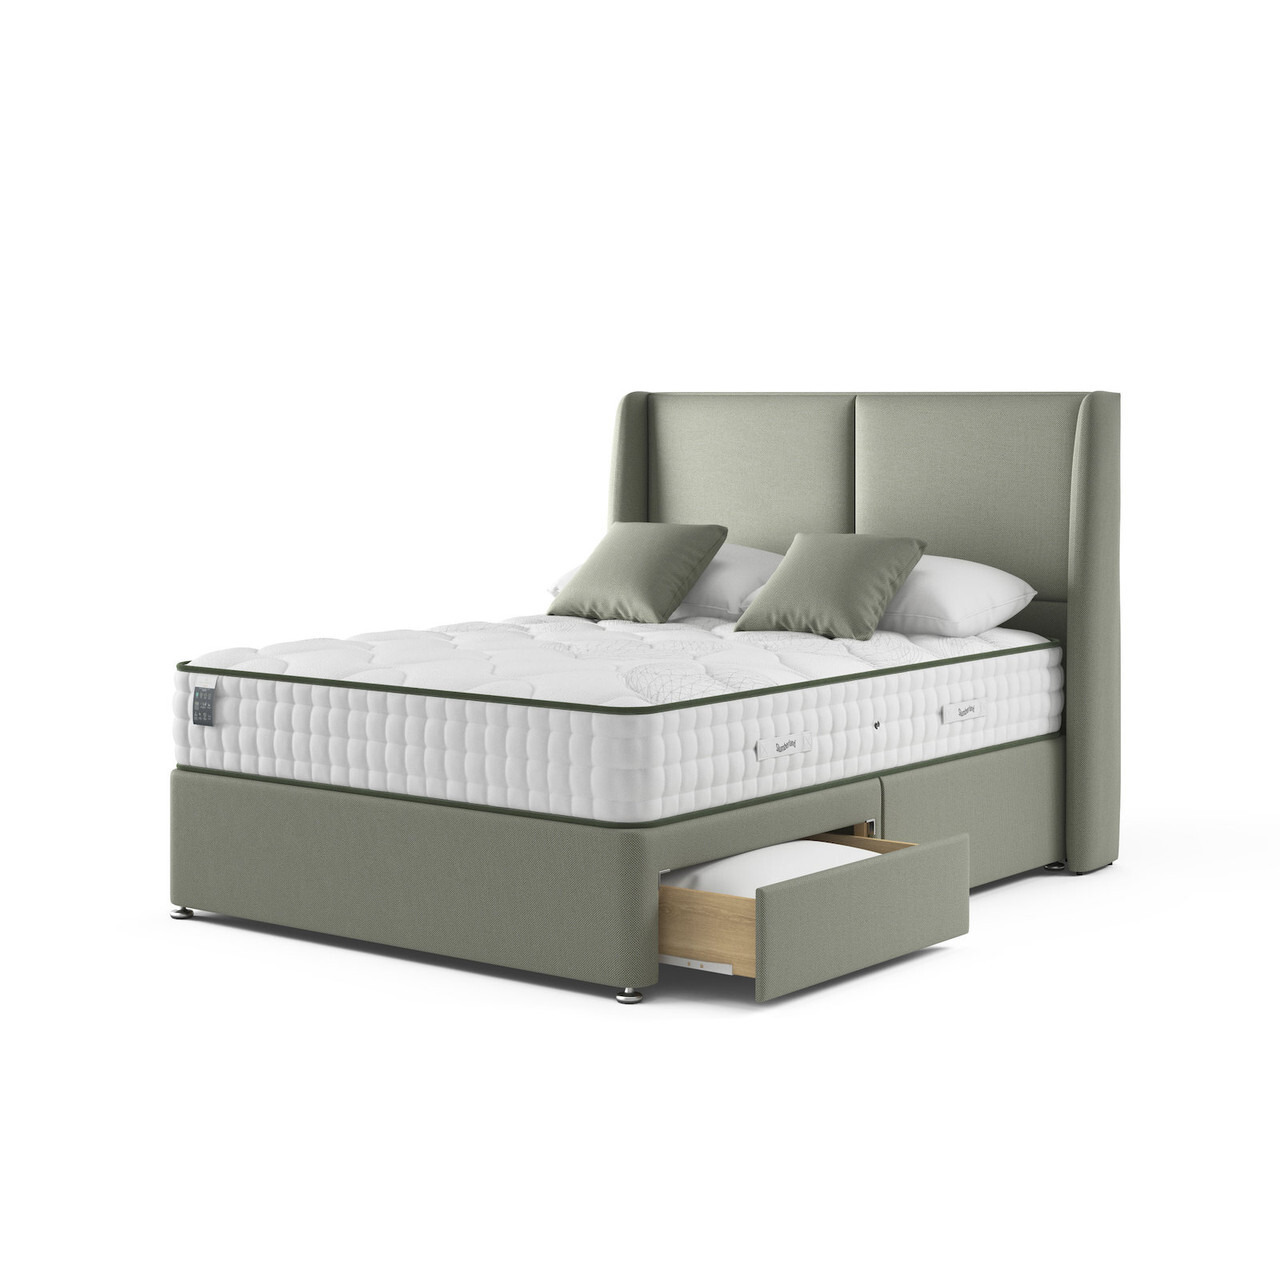 Slumberland Natural Solutions 2800 Divan Bed Set - image 1